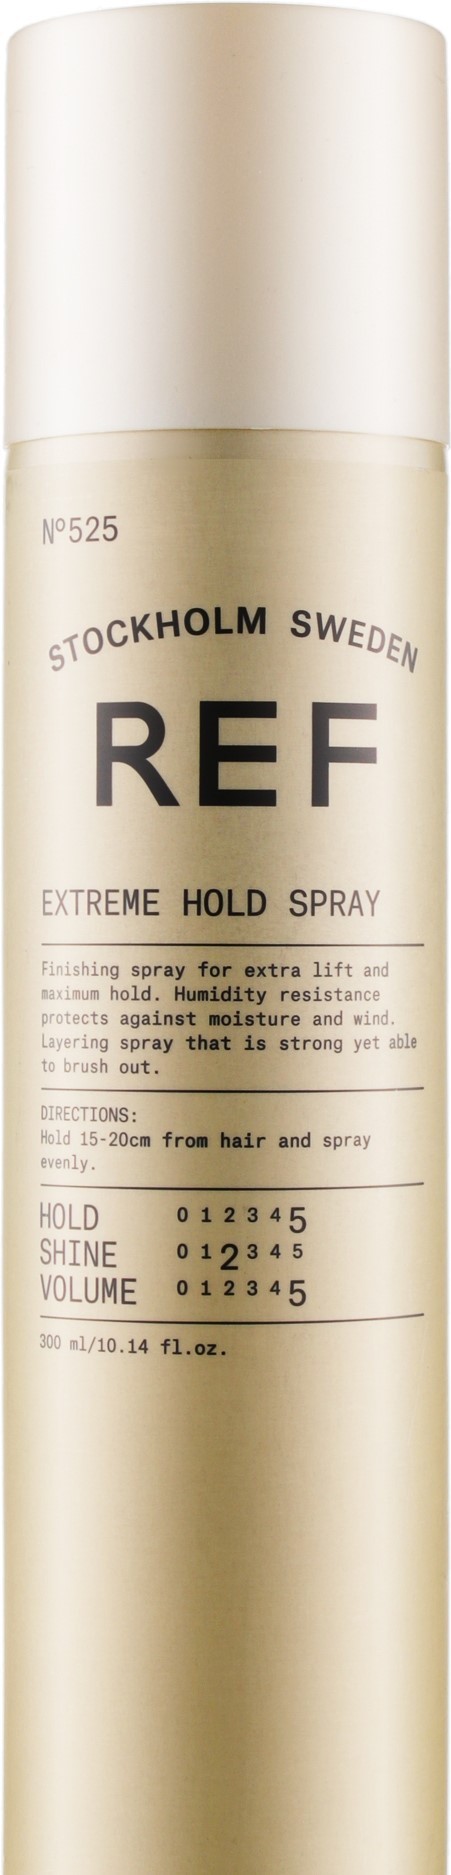 Лак для волосся Extreme Hold Spray REF 75 мл — фото №1